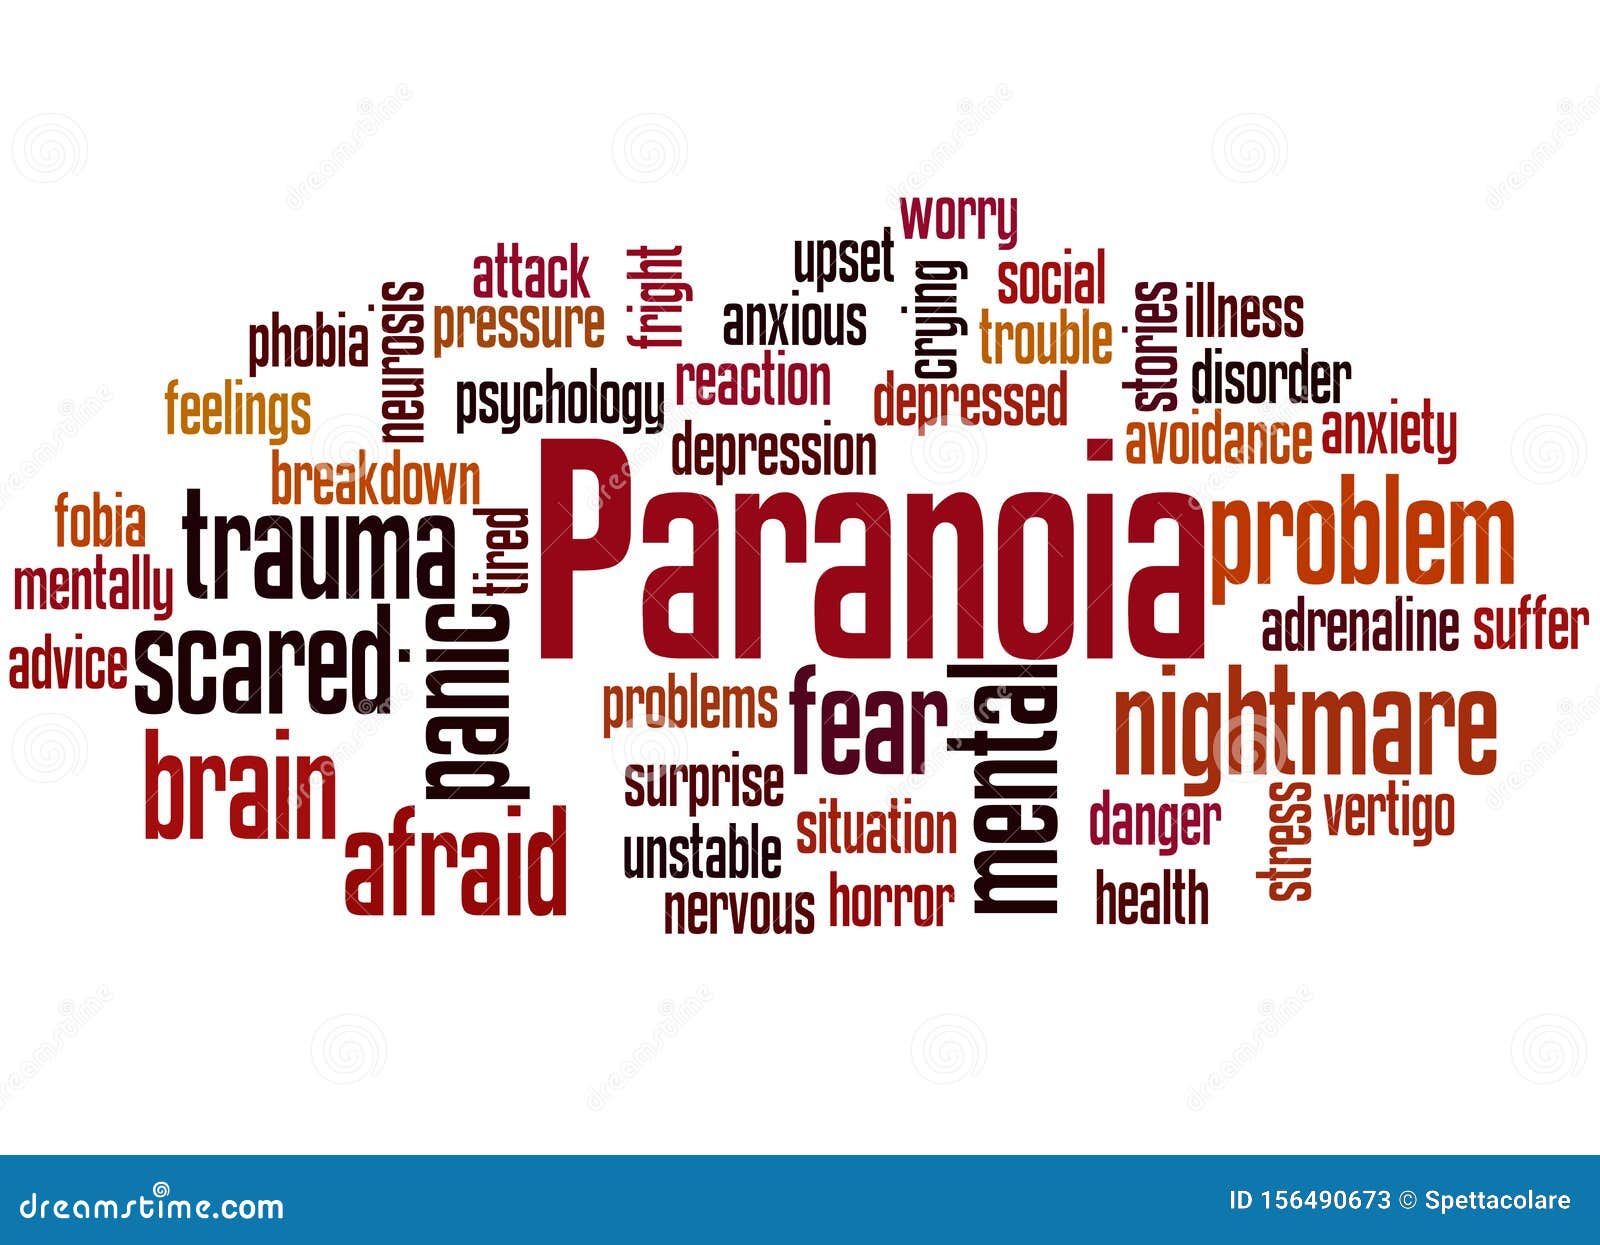 paranoia word cloud concept